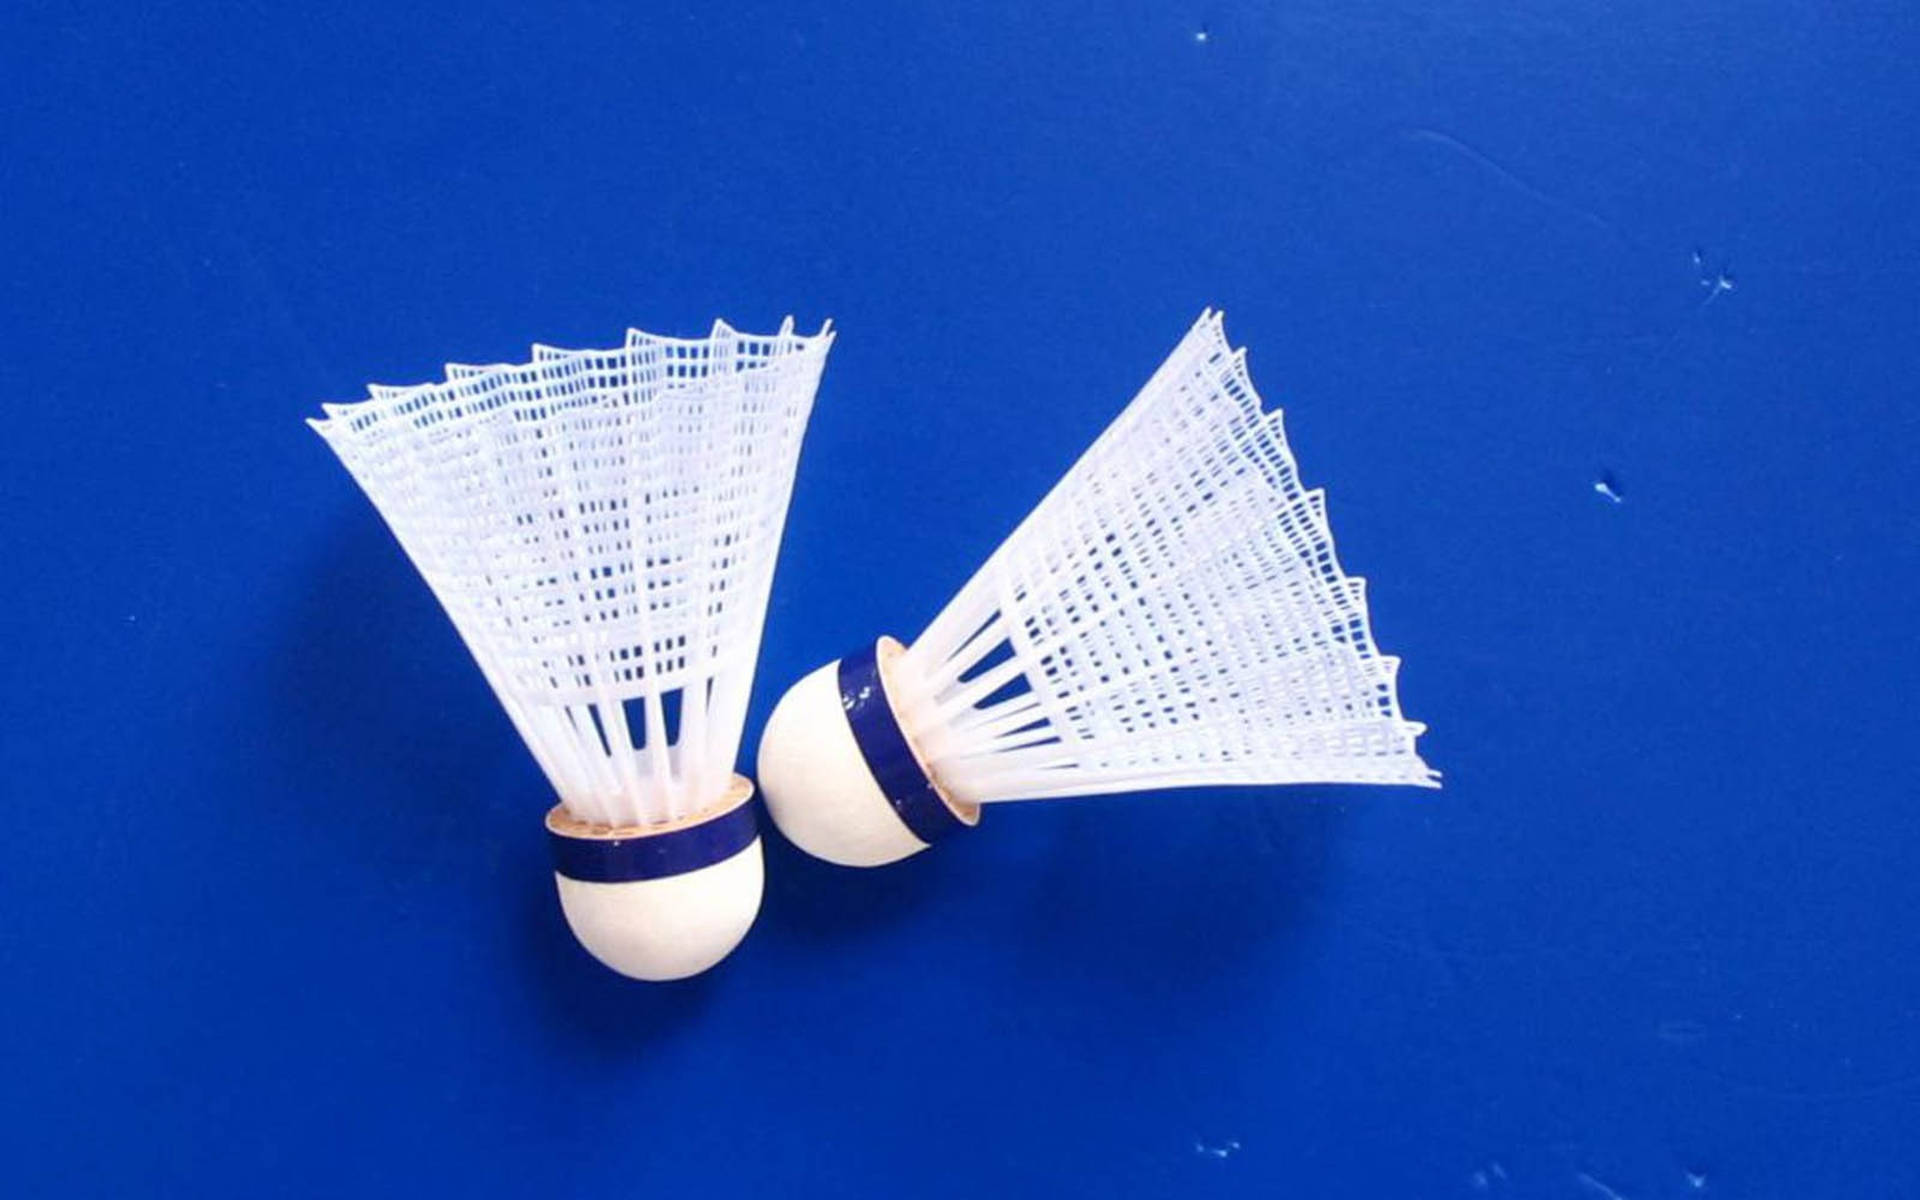 Free Badminton Wallpaper Downloads, [100+] Badminton Wallpapers for FREE |  